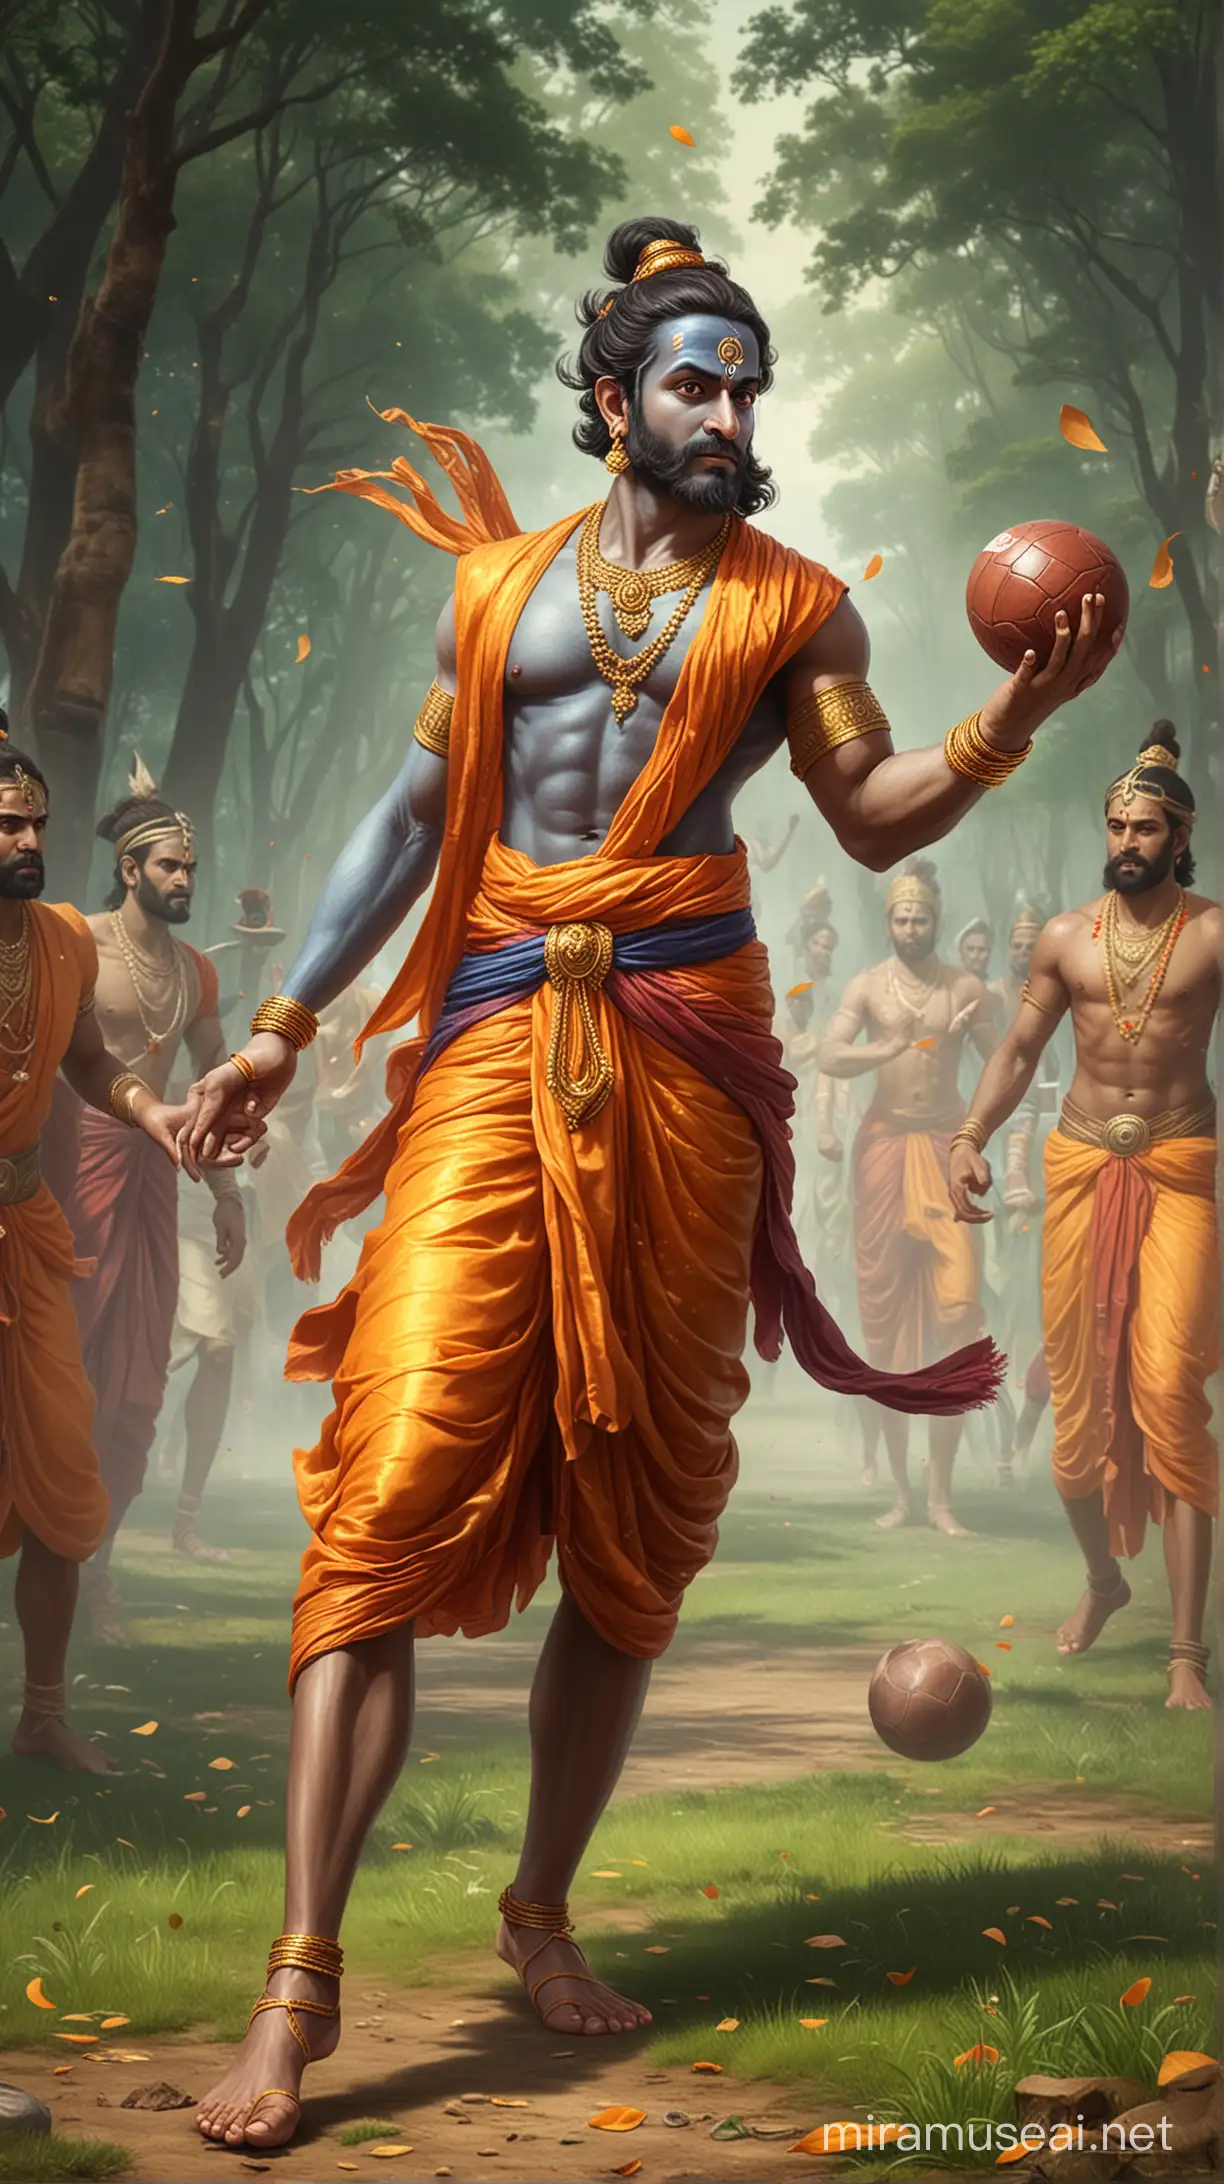 Create an image of lord Rama playing football 